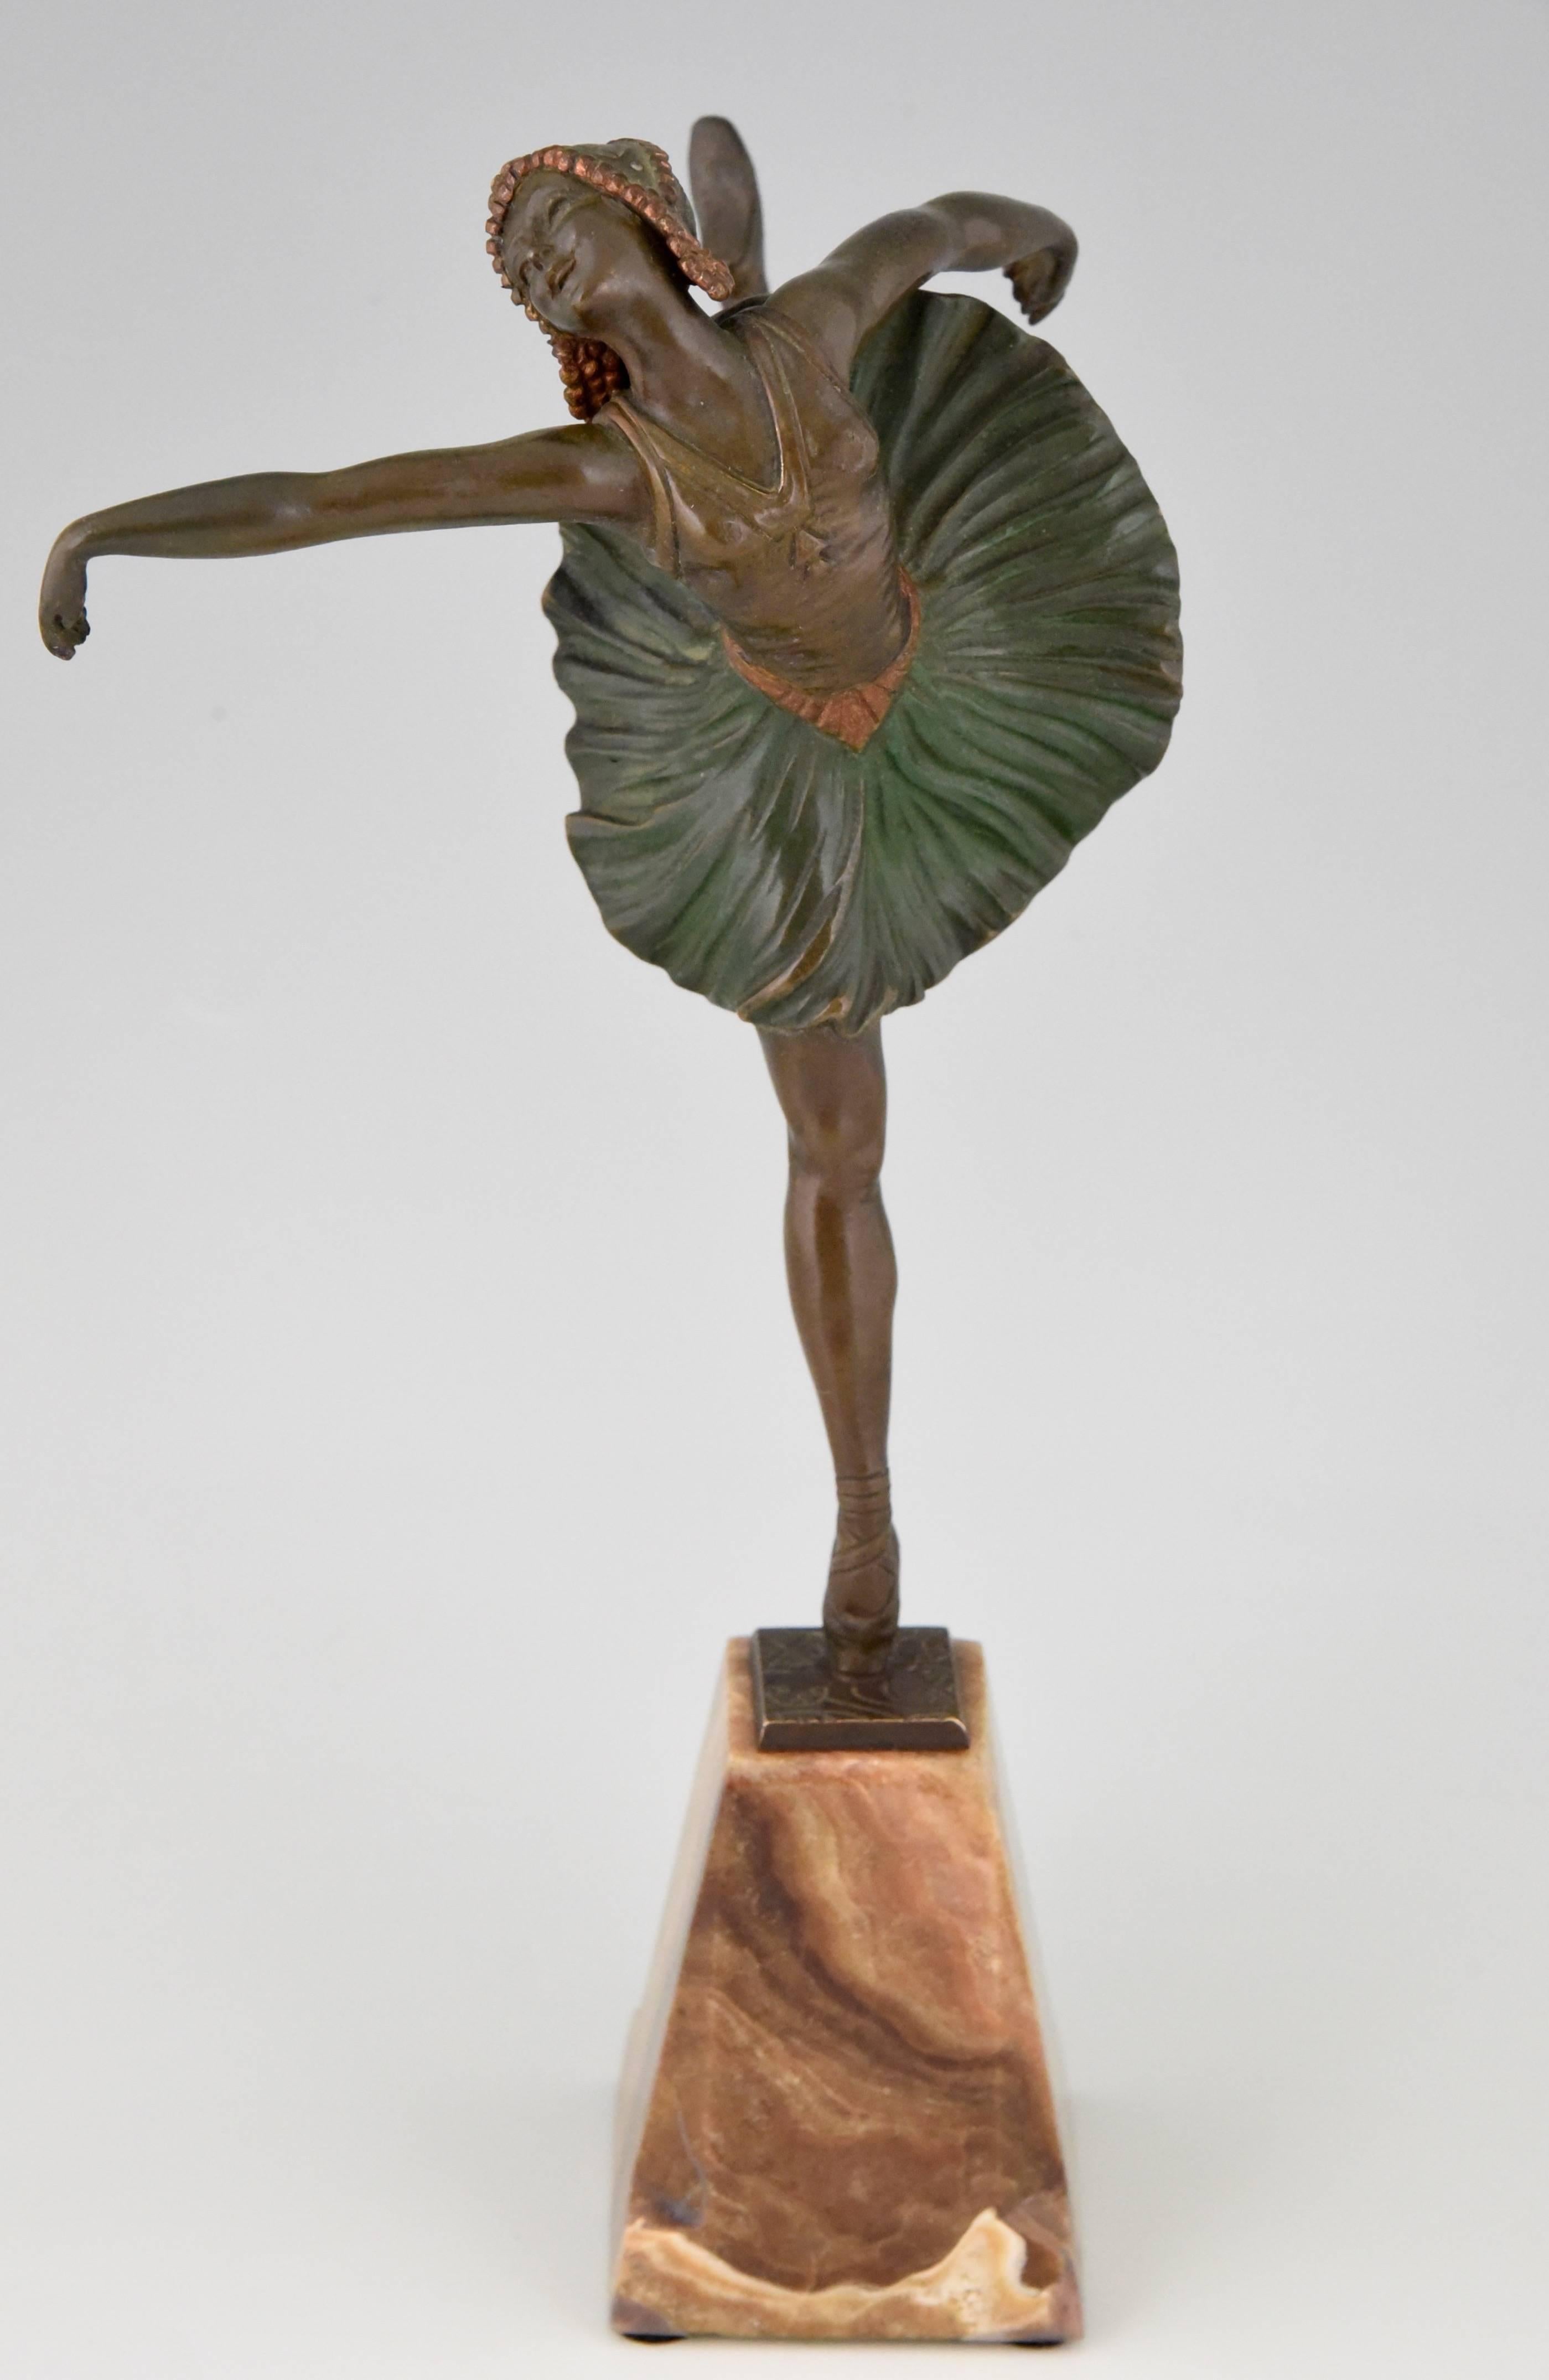 Patinated French Art Deco Bronze Sculpture Dancer Ballerina by Hippolyte Fournier, 1930